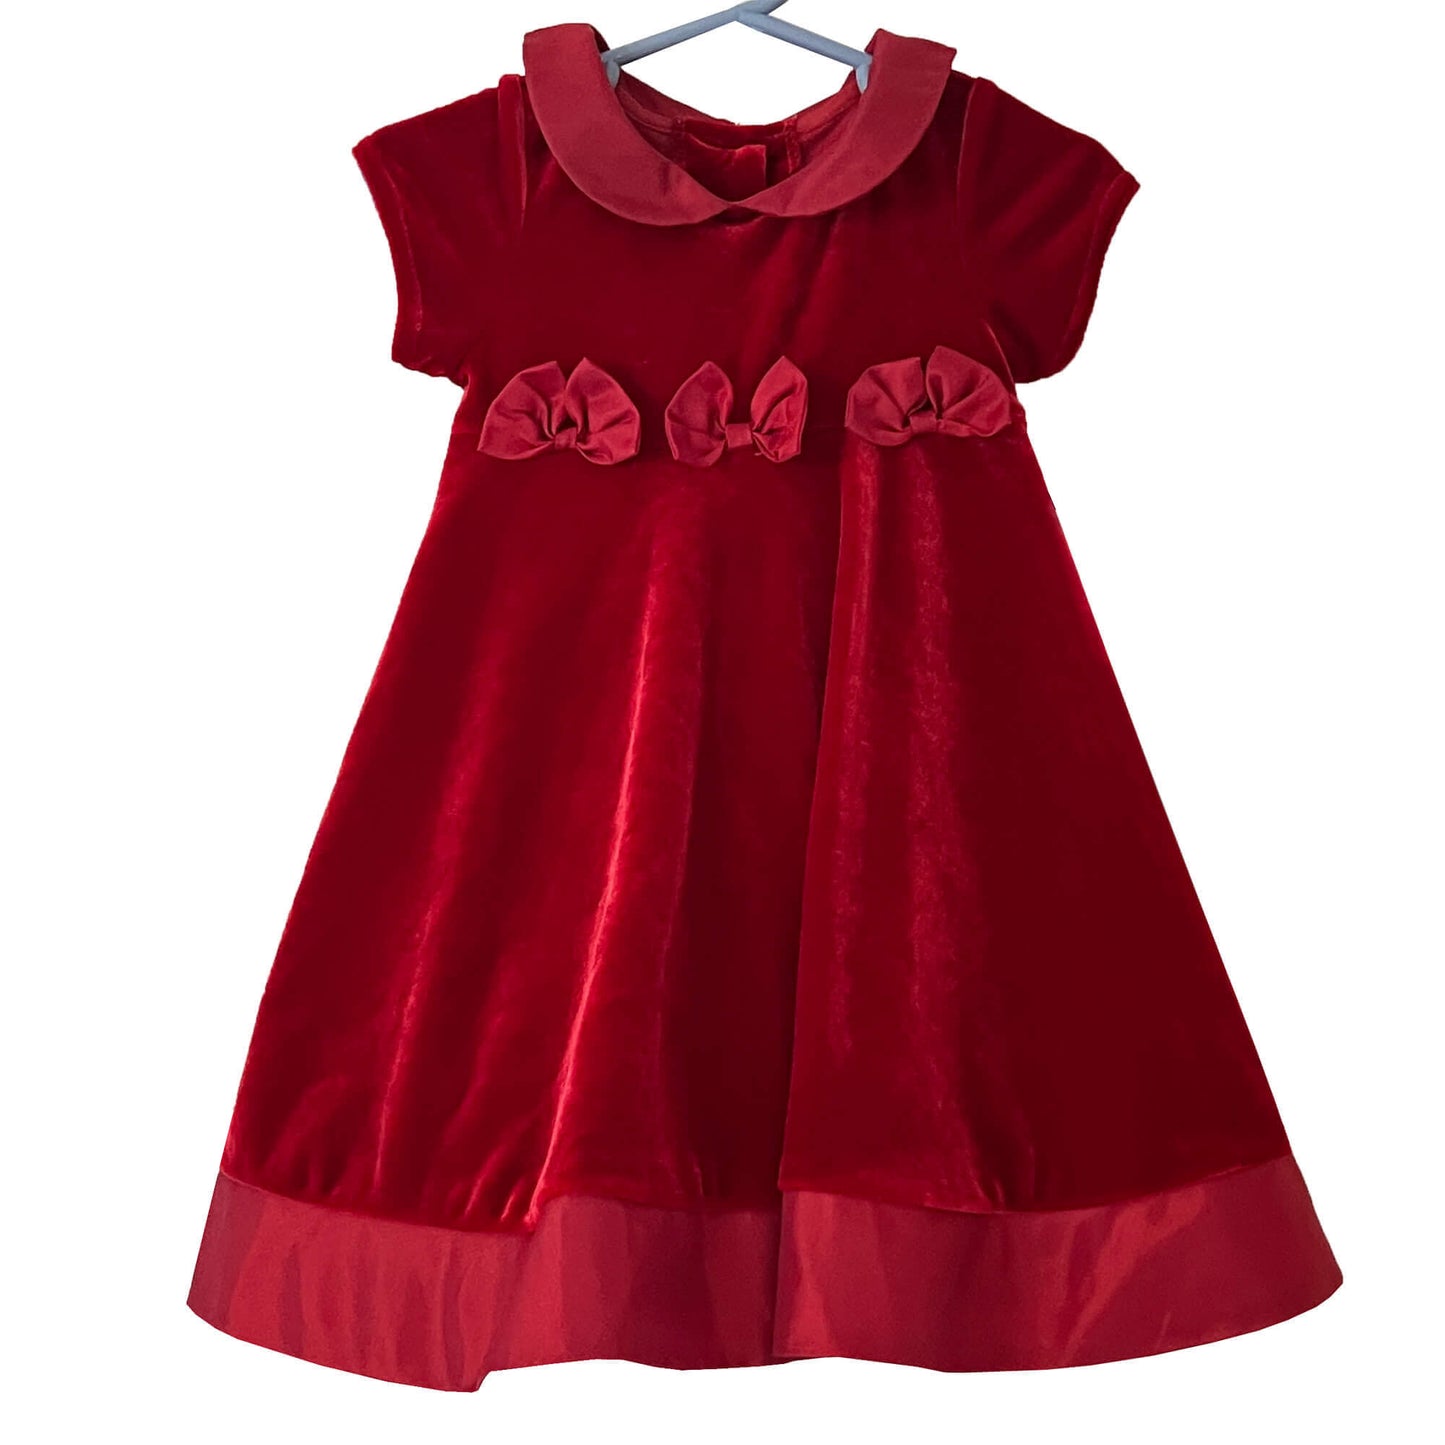 Good-Lad-Infant-Girl_s-Red-Velvet-Holiday-Party-Dress_-Size-18M.-Shop-eBargainsAndDeals.com